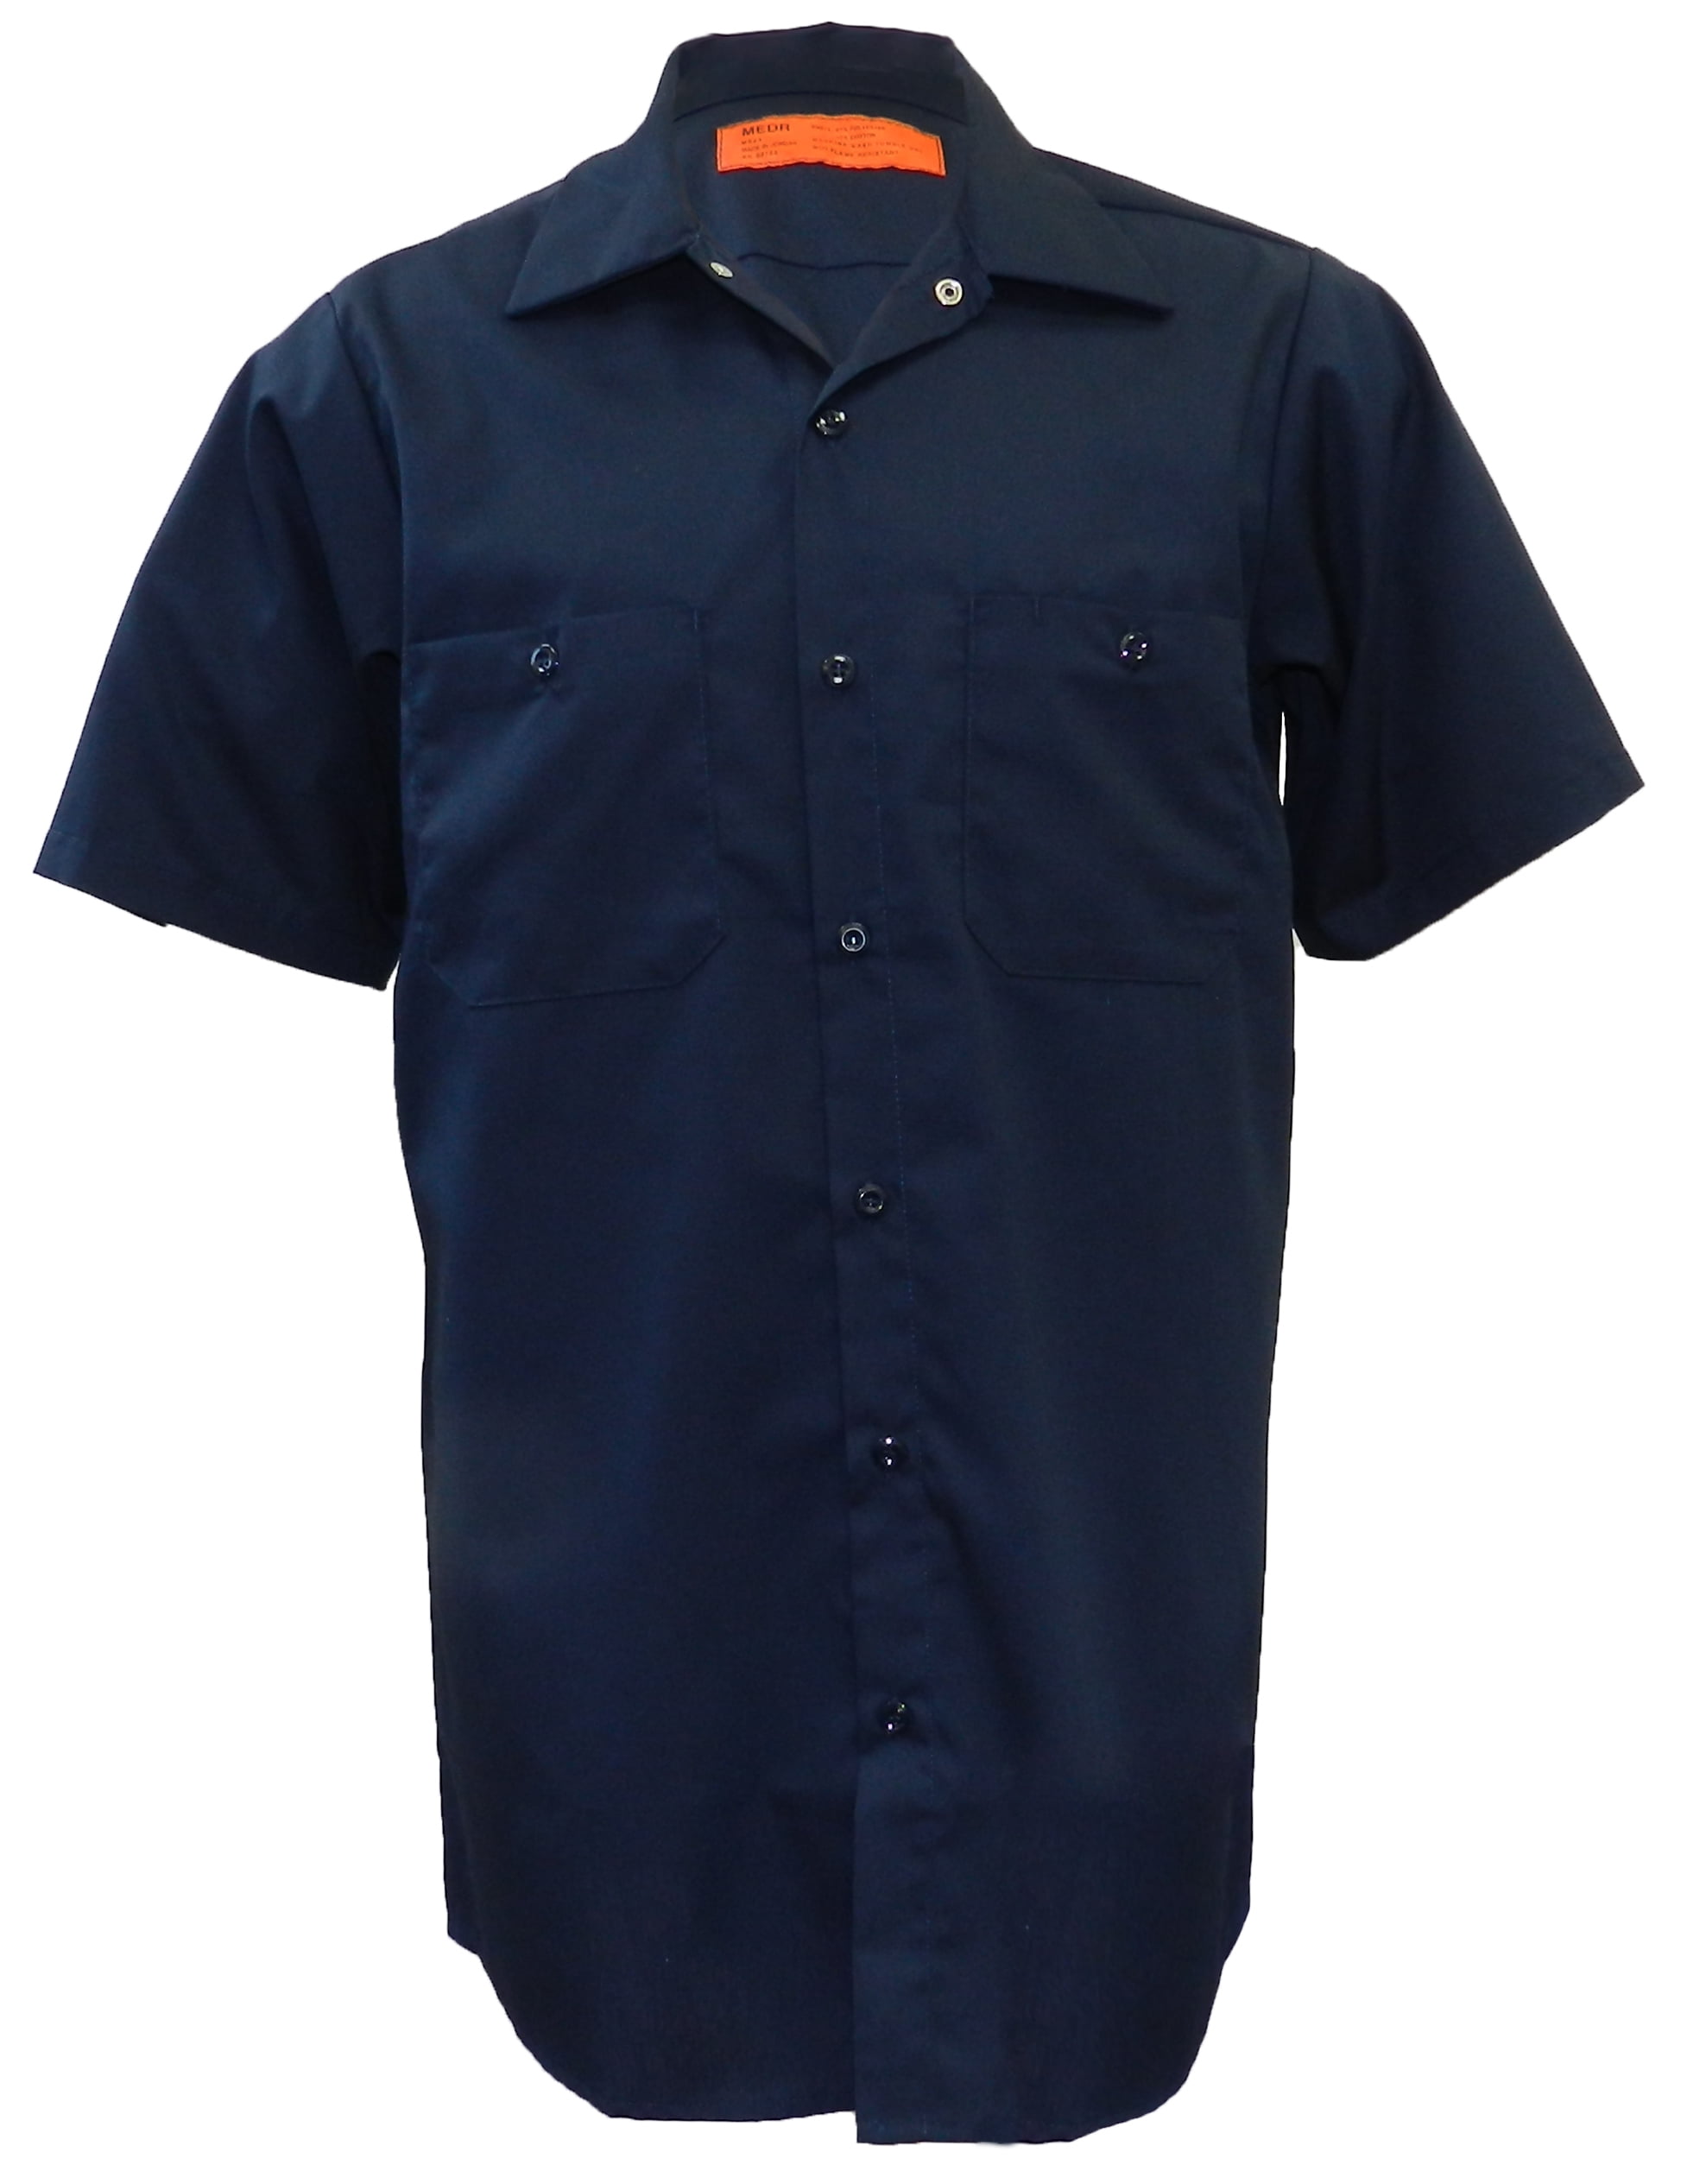 Solar 1 Clothing Industrial Short Sleeve Work Shirt MS24 - Walmart.com